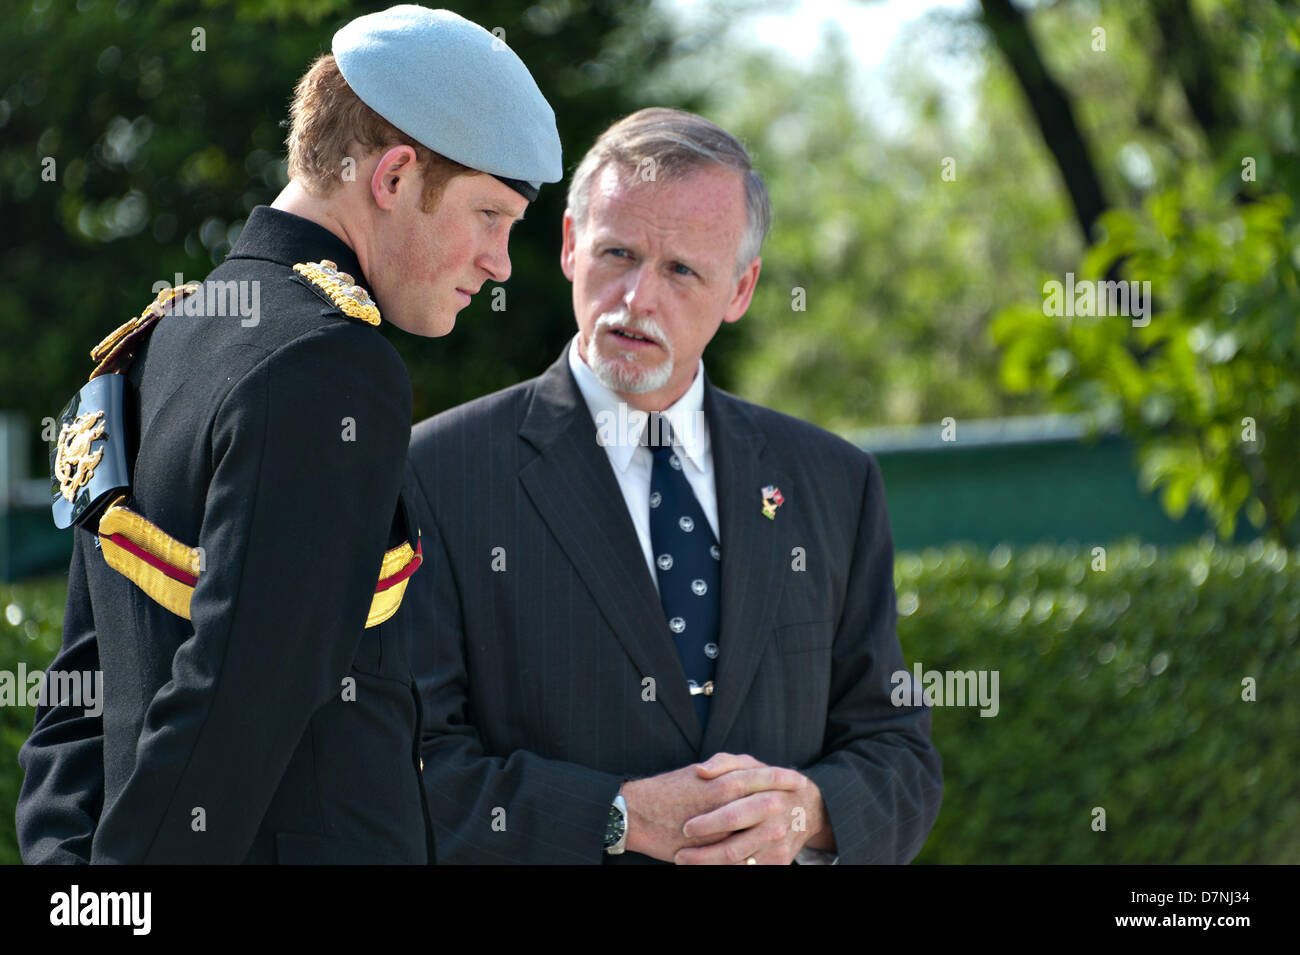 HRH Prince Harry of Wales speaks with Patrick K. Hallinan, the superintendent of Arlington National Cemetery at President John F. Kennedy's gravesite May 10, 2013 in Arlington, VA. Stock Photo